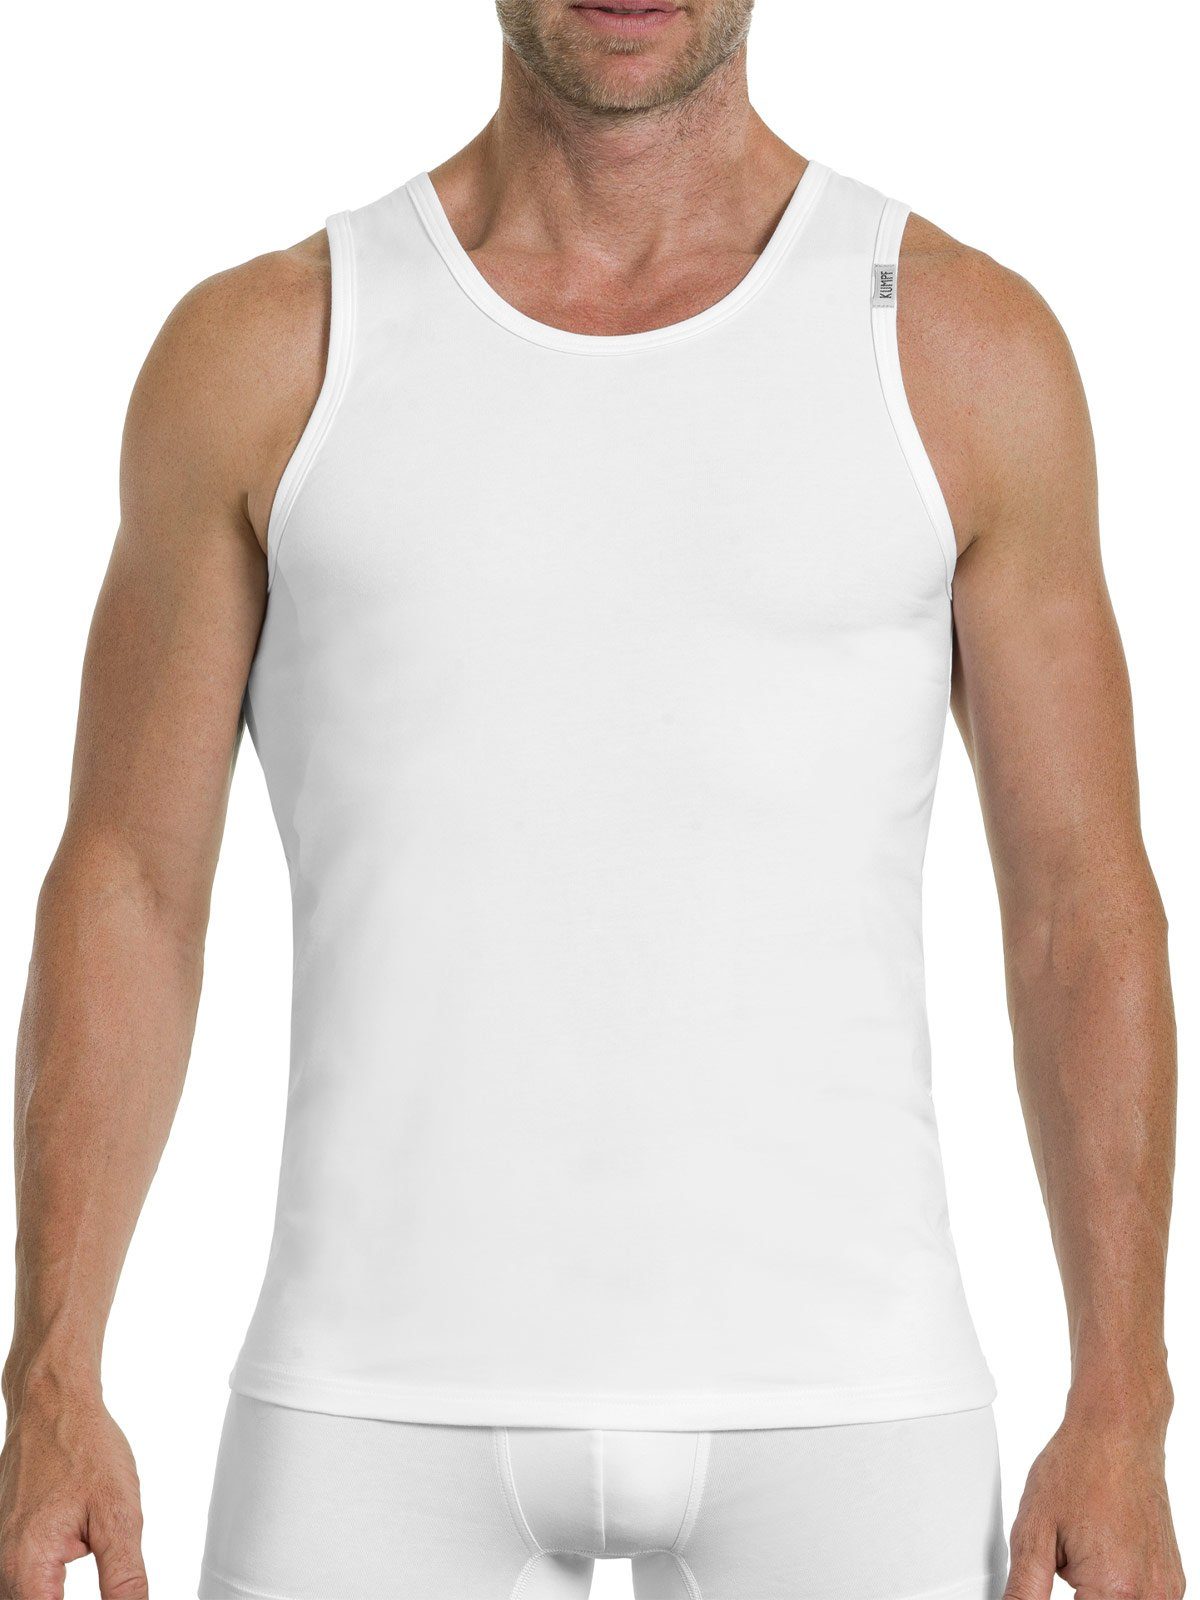 Unterhemd hohe weiss KUMPF Bio Herren Achselhemd 1-St) Cotton Markenqualität (Stück,